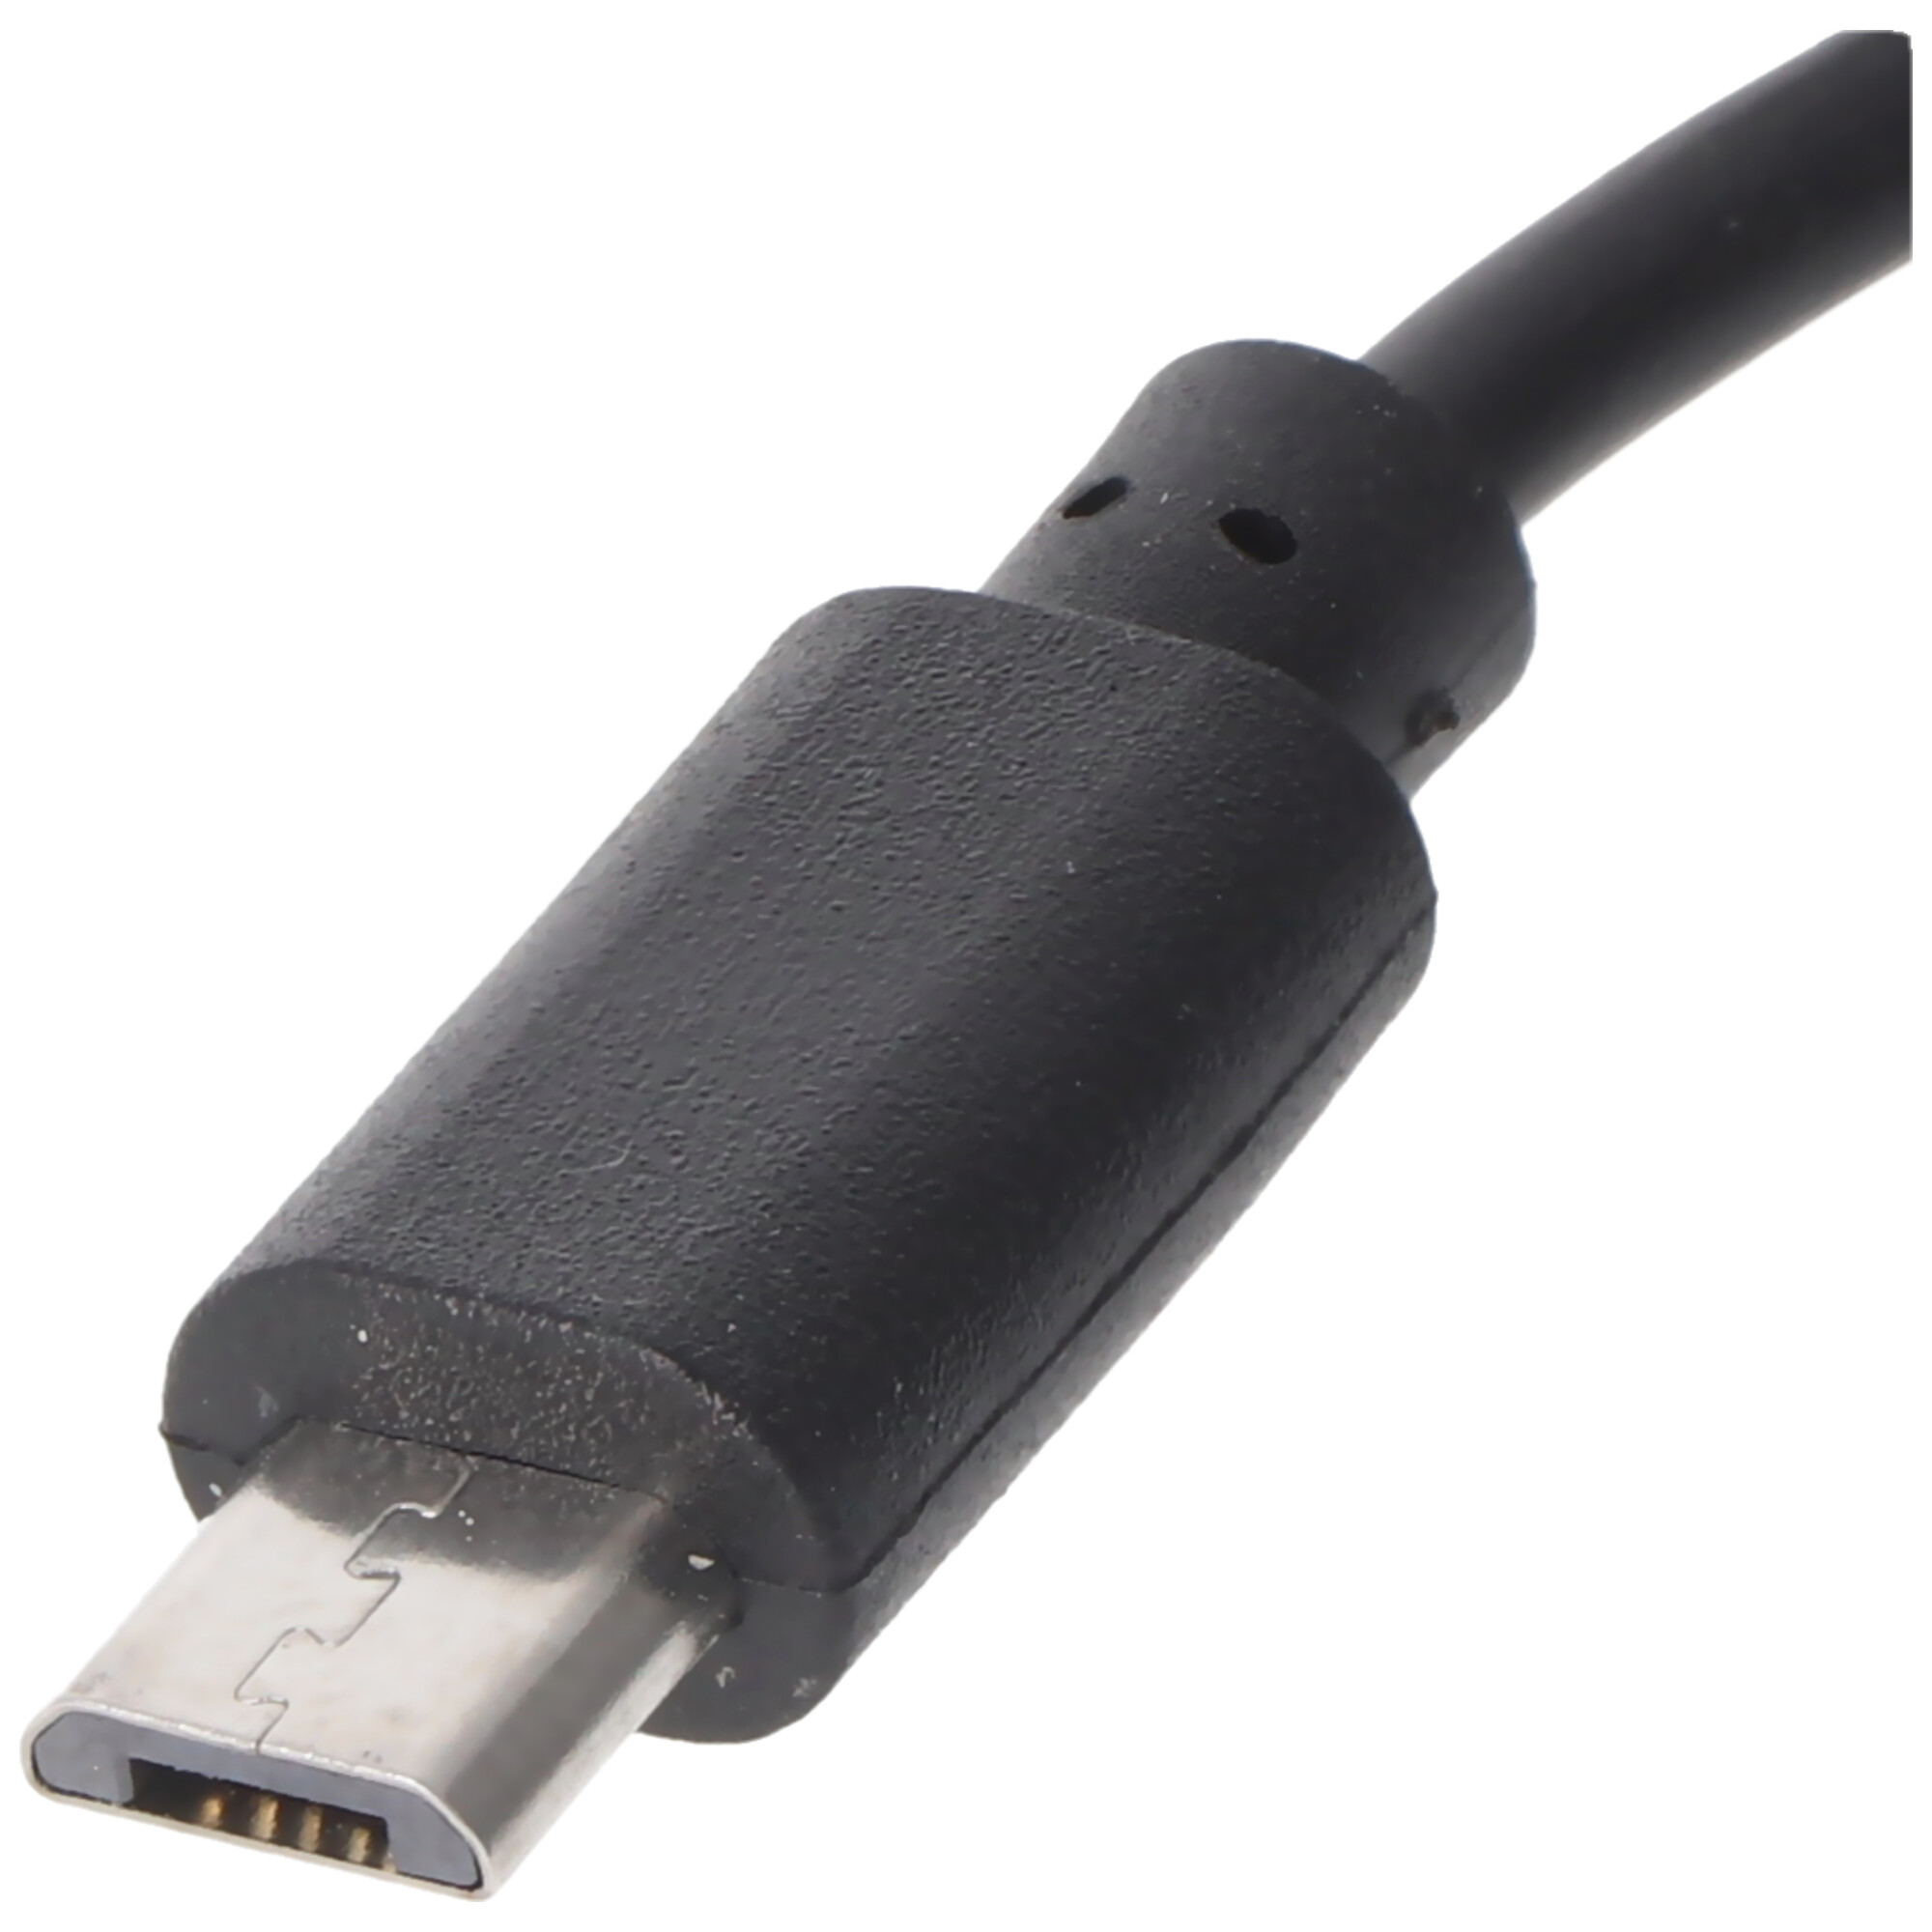 AccuCell KFZ-Ladekabel Micro-USB - 1A - schwarz